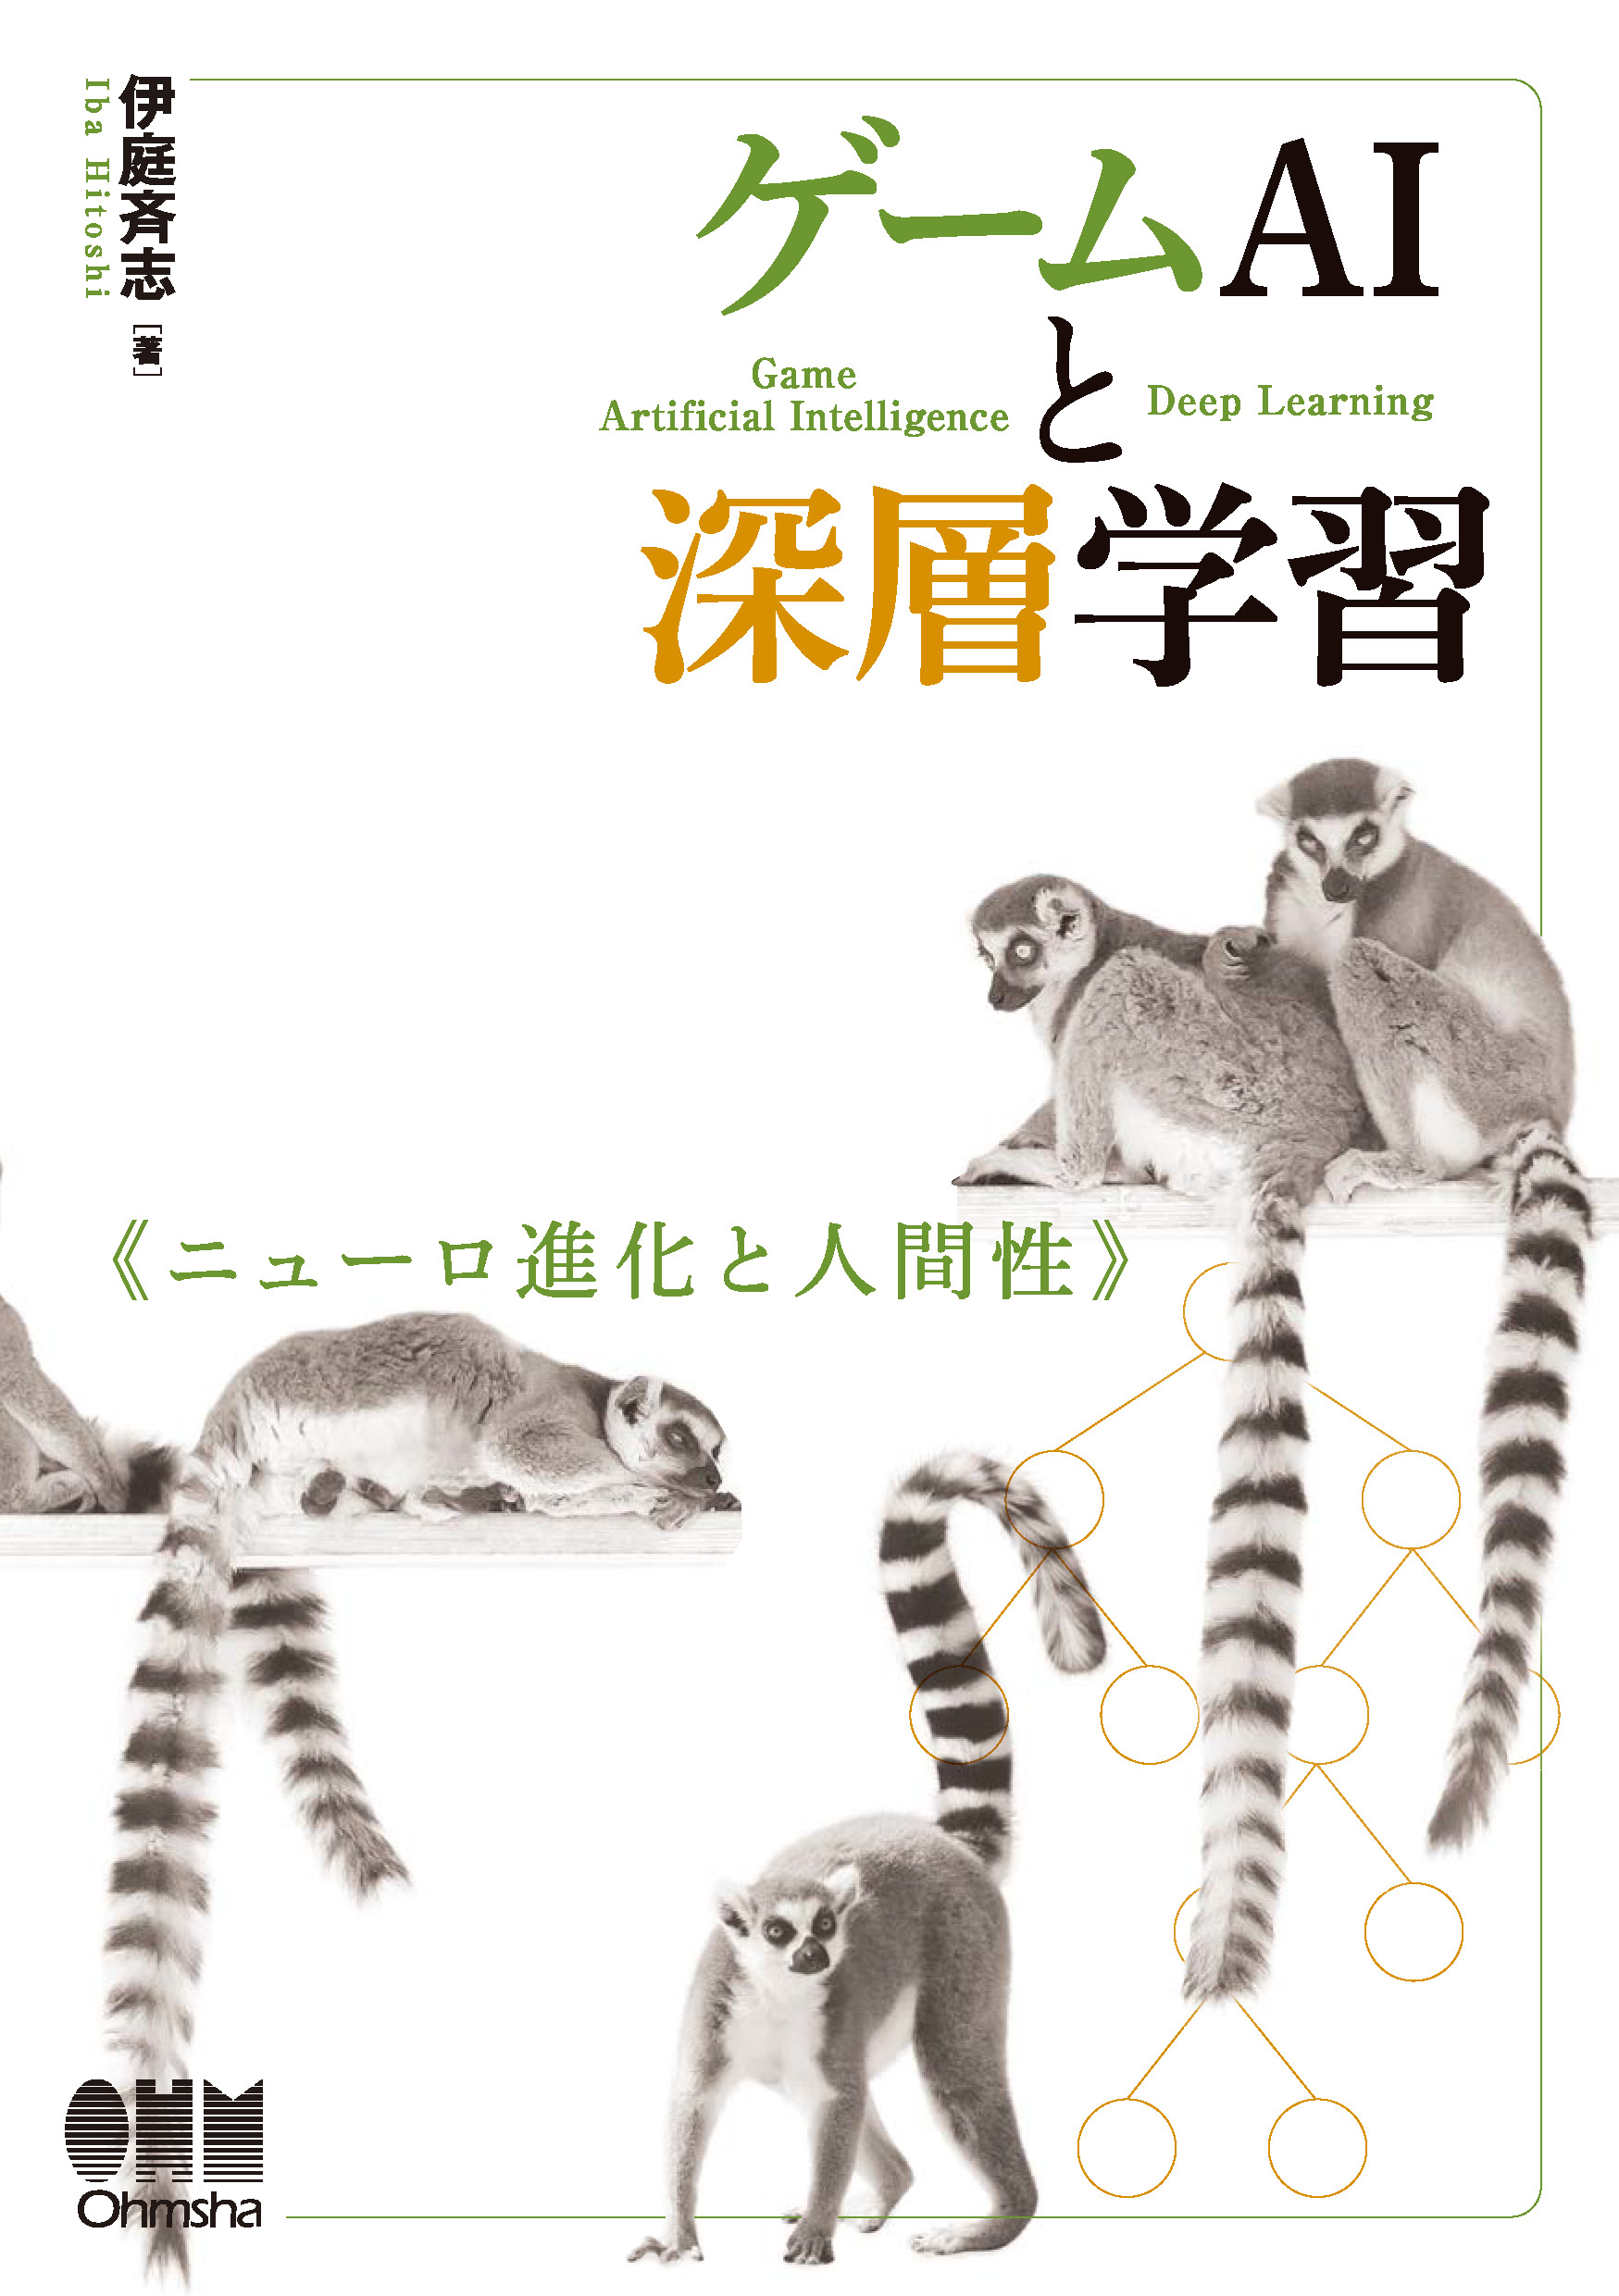 Illustration of four lemurs